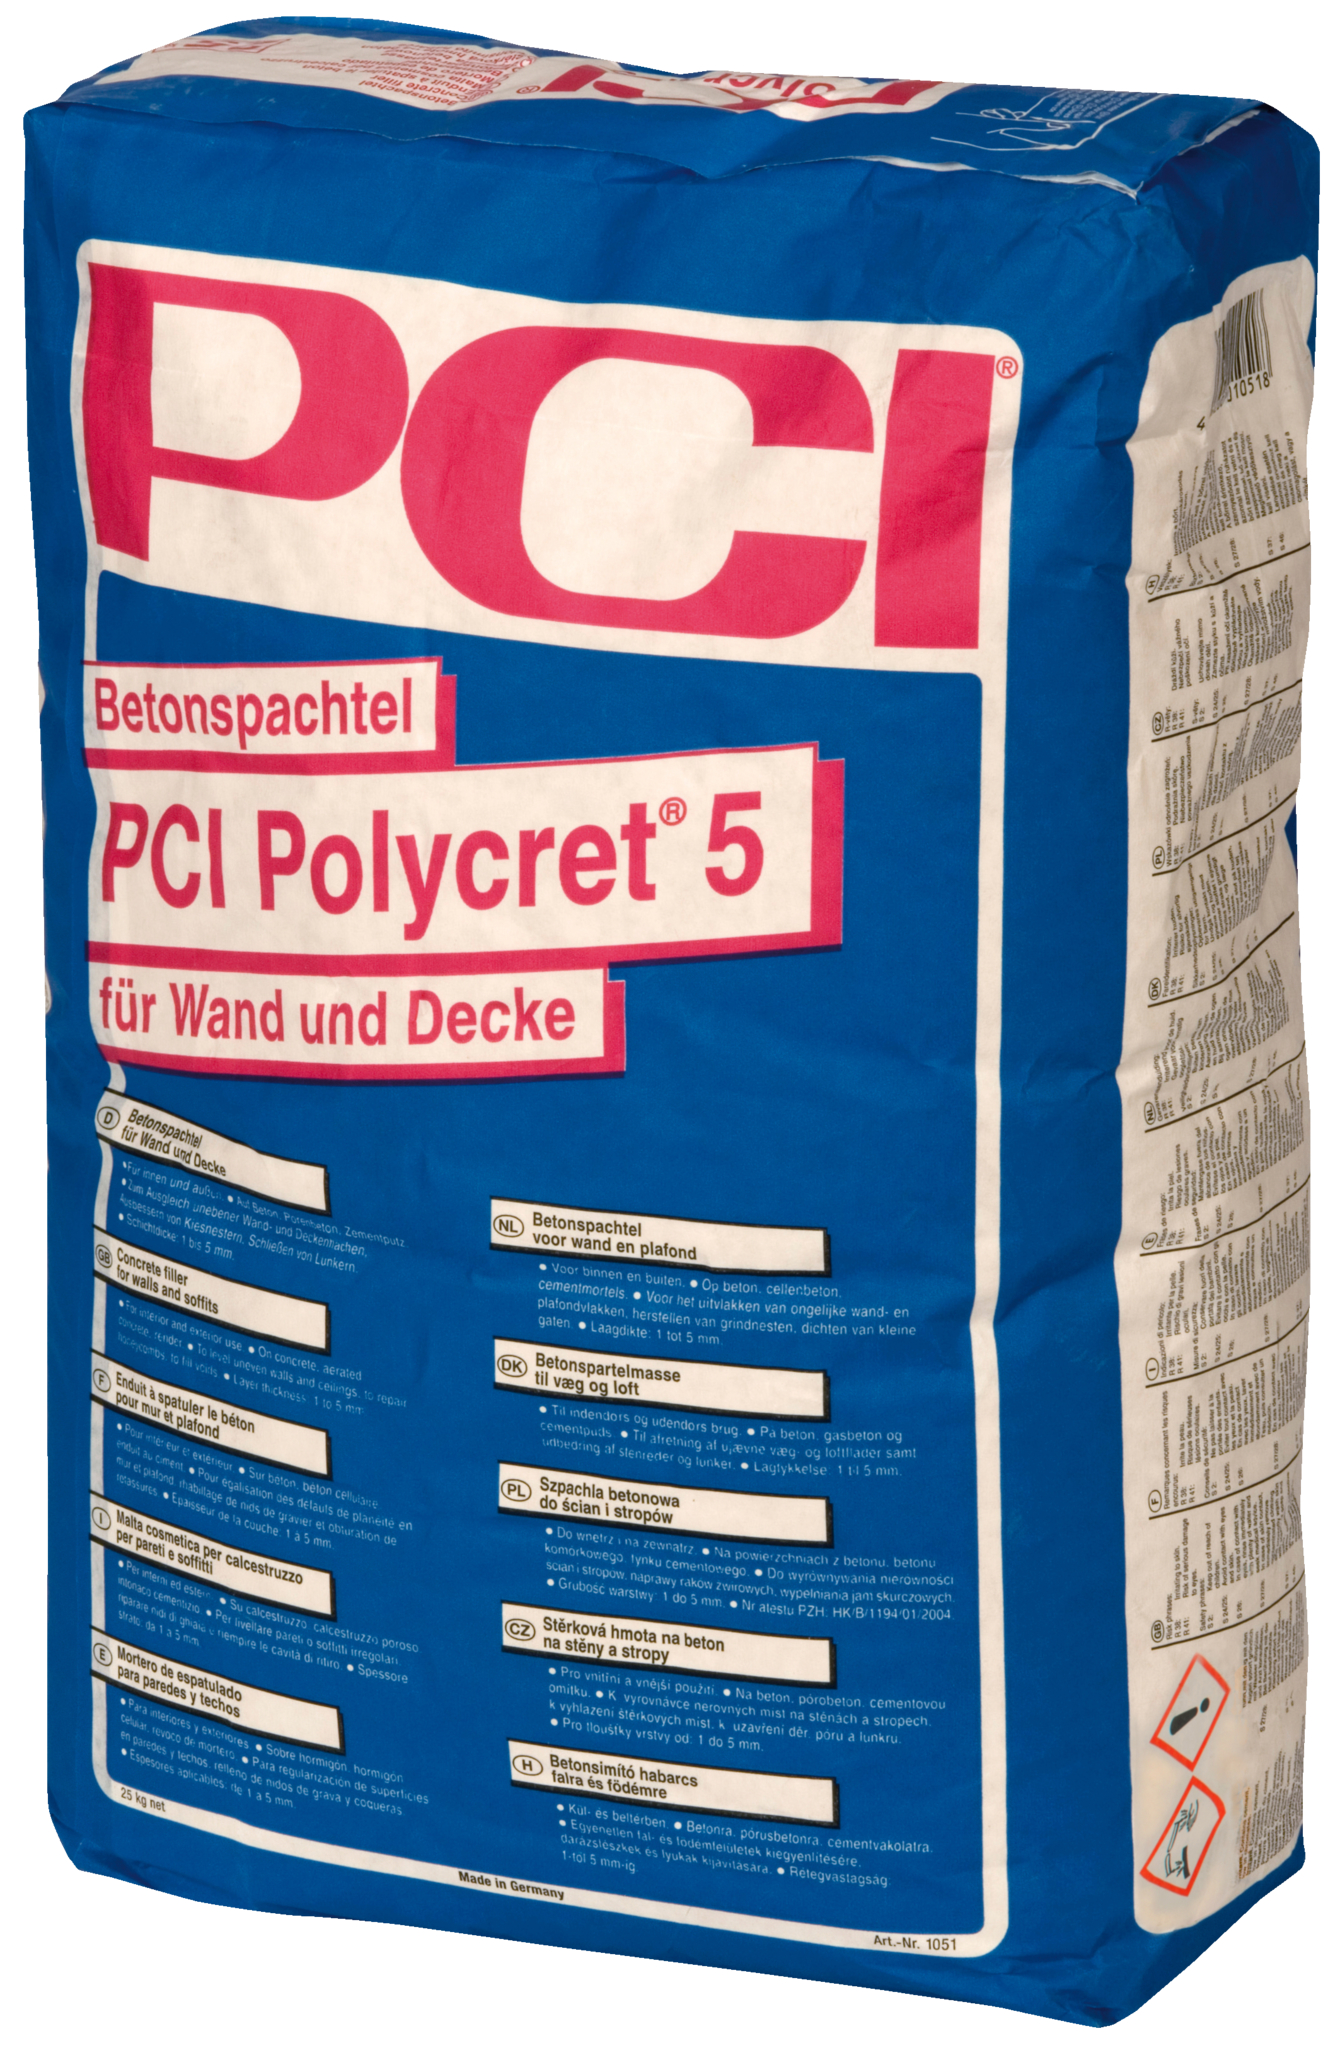 ZL OST PCI Polycret 5 Betonspachtel grau 25kg 